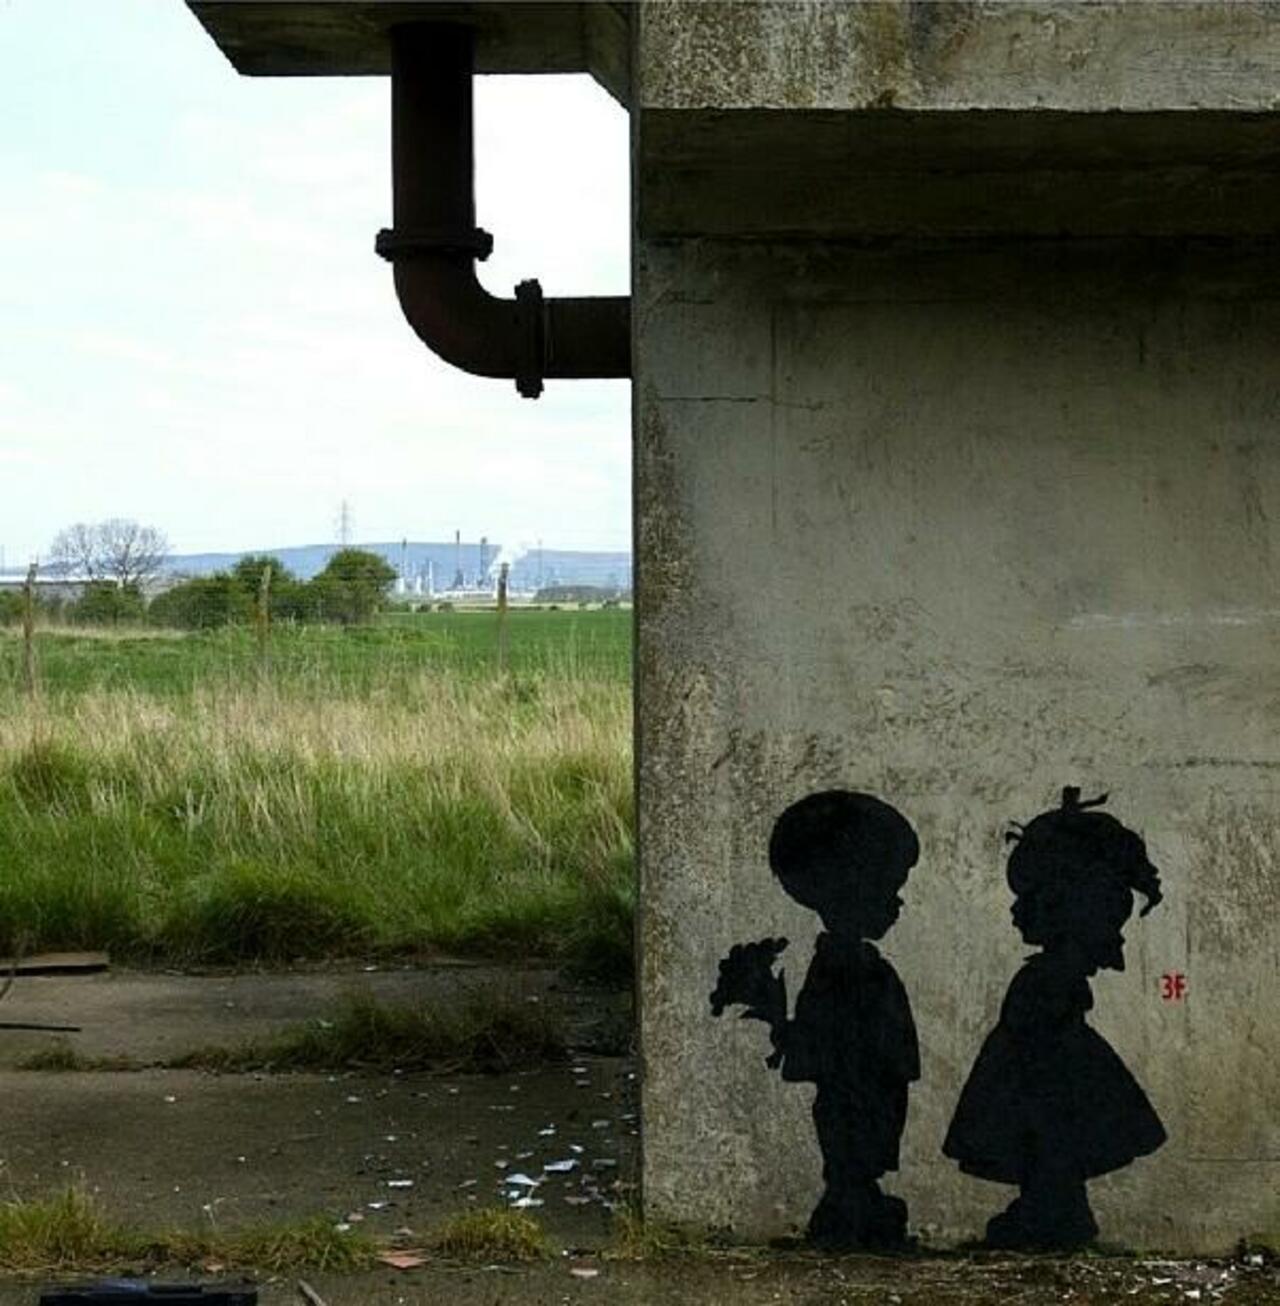 I RT @KanelleFeeling: Found love in a hopeless place!

Street Art by 3fountains 

#art #mural #graffiti #streetart http://t.co/8orgBs6FJl